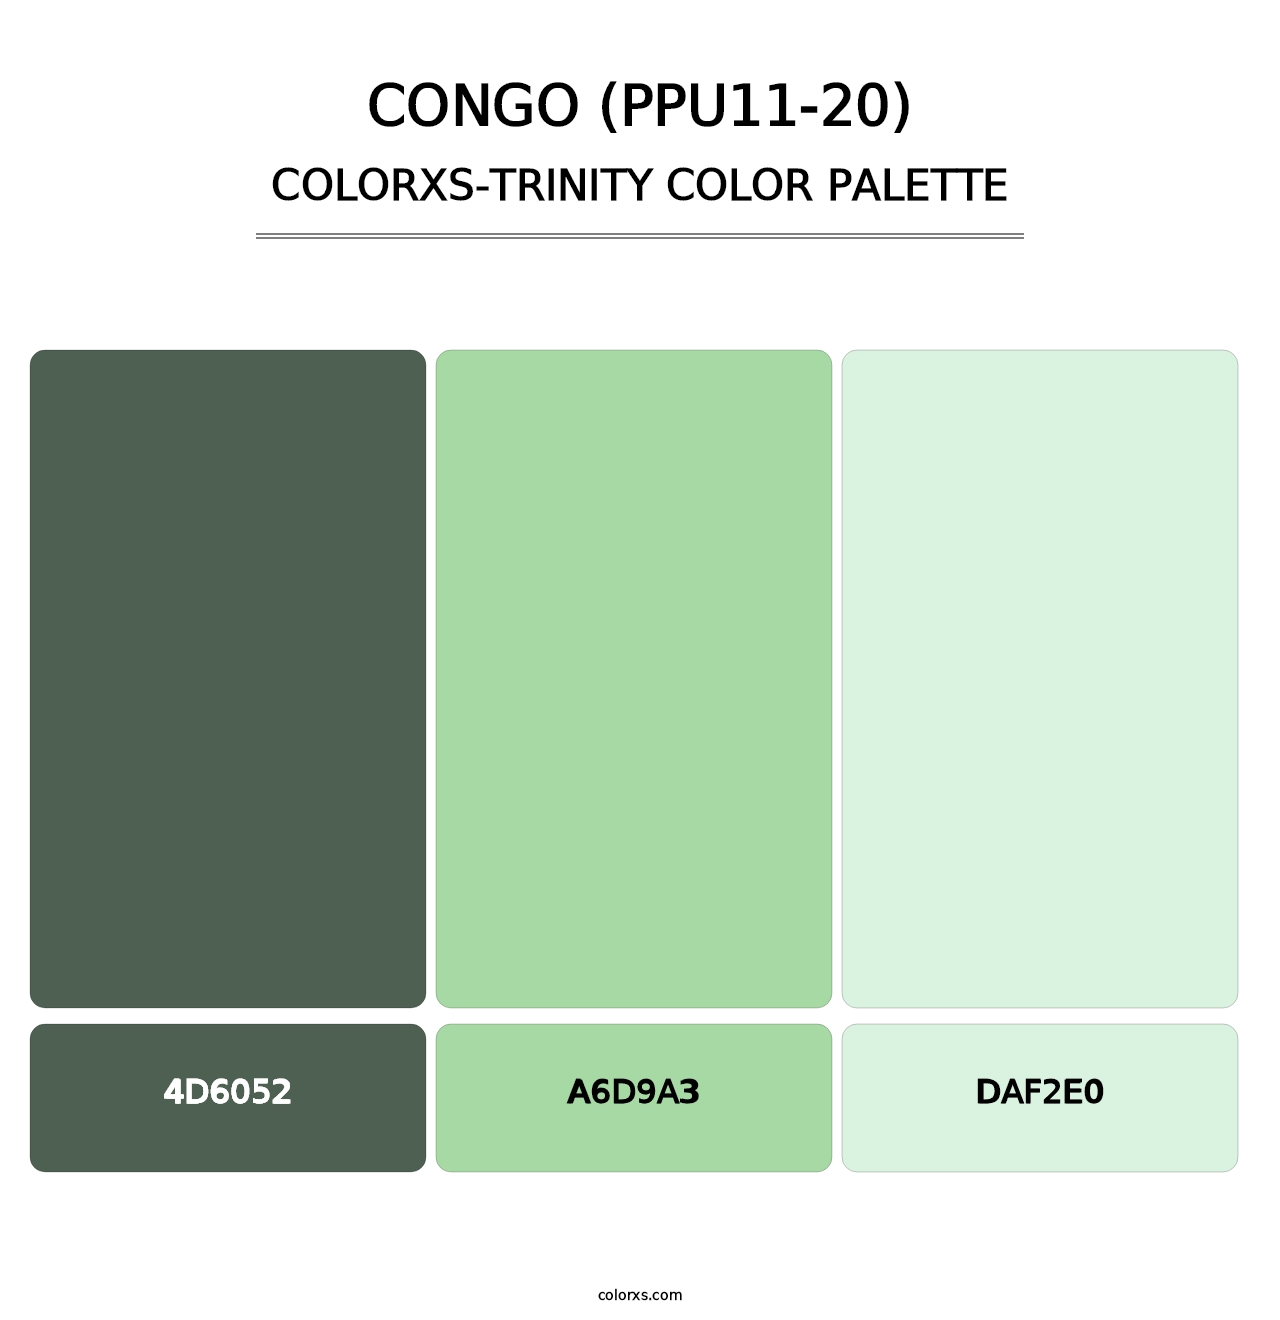 Congo (PPU11-20) - Colorxs Trinity Palette